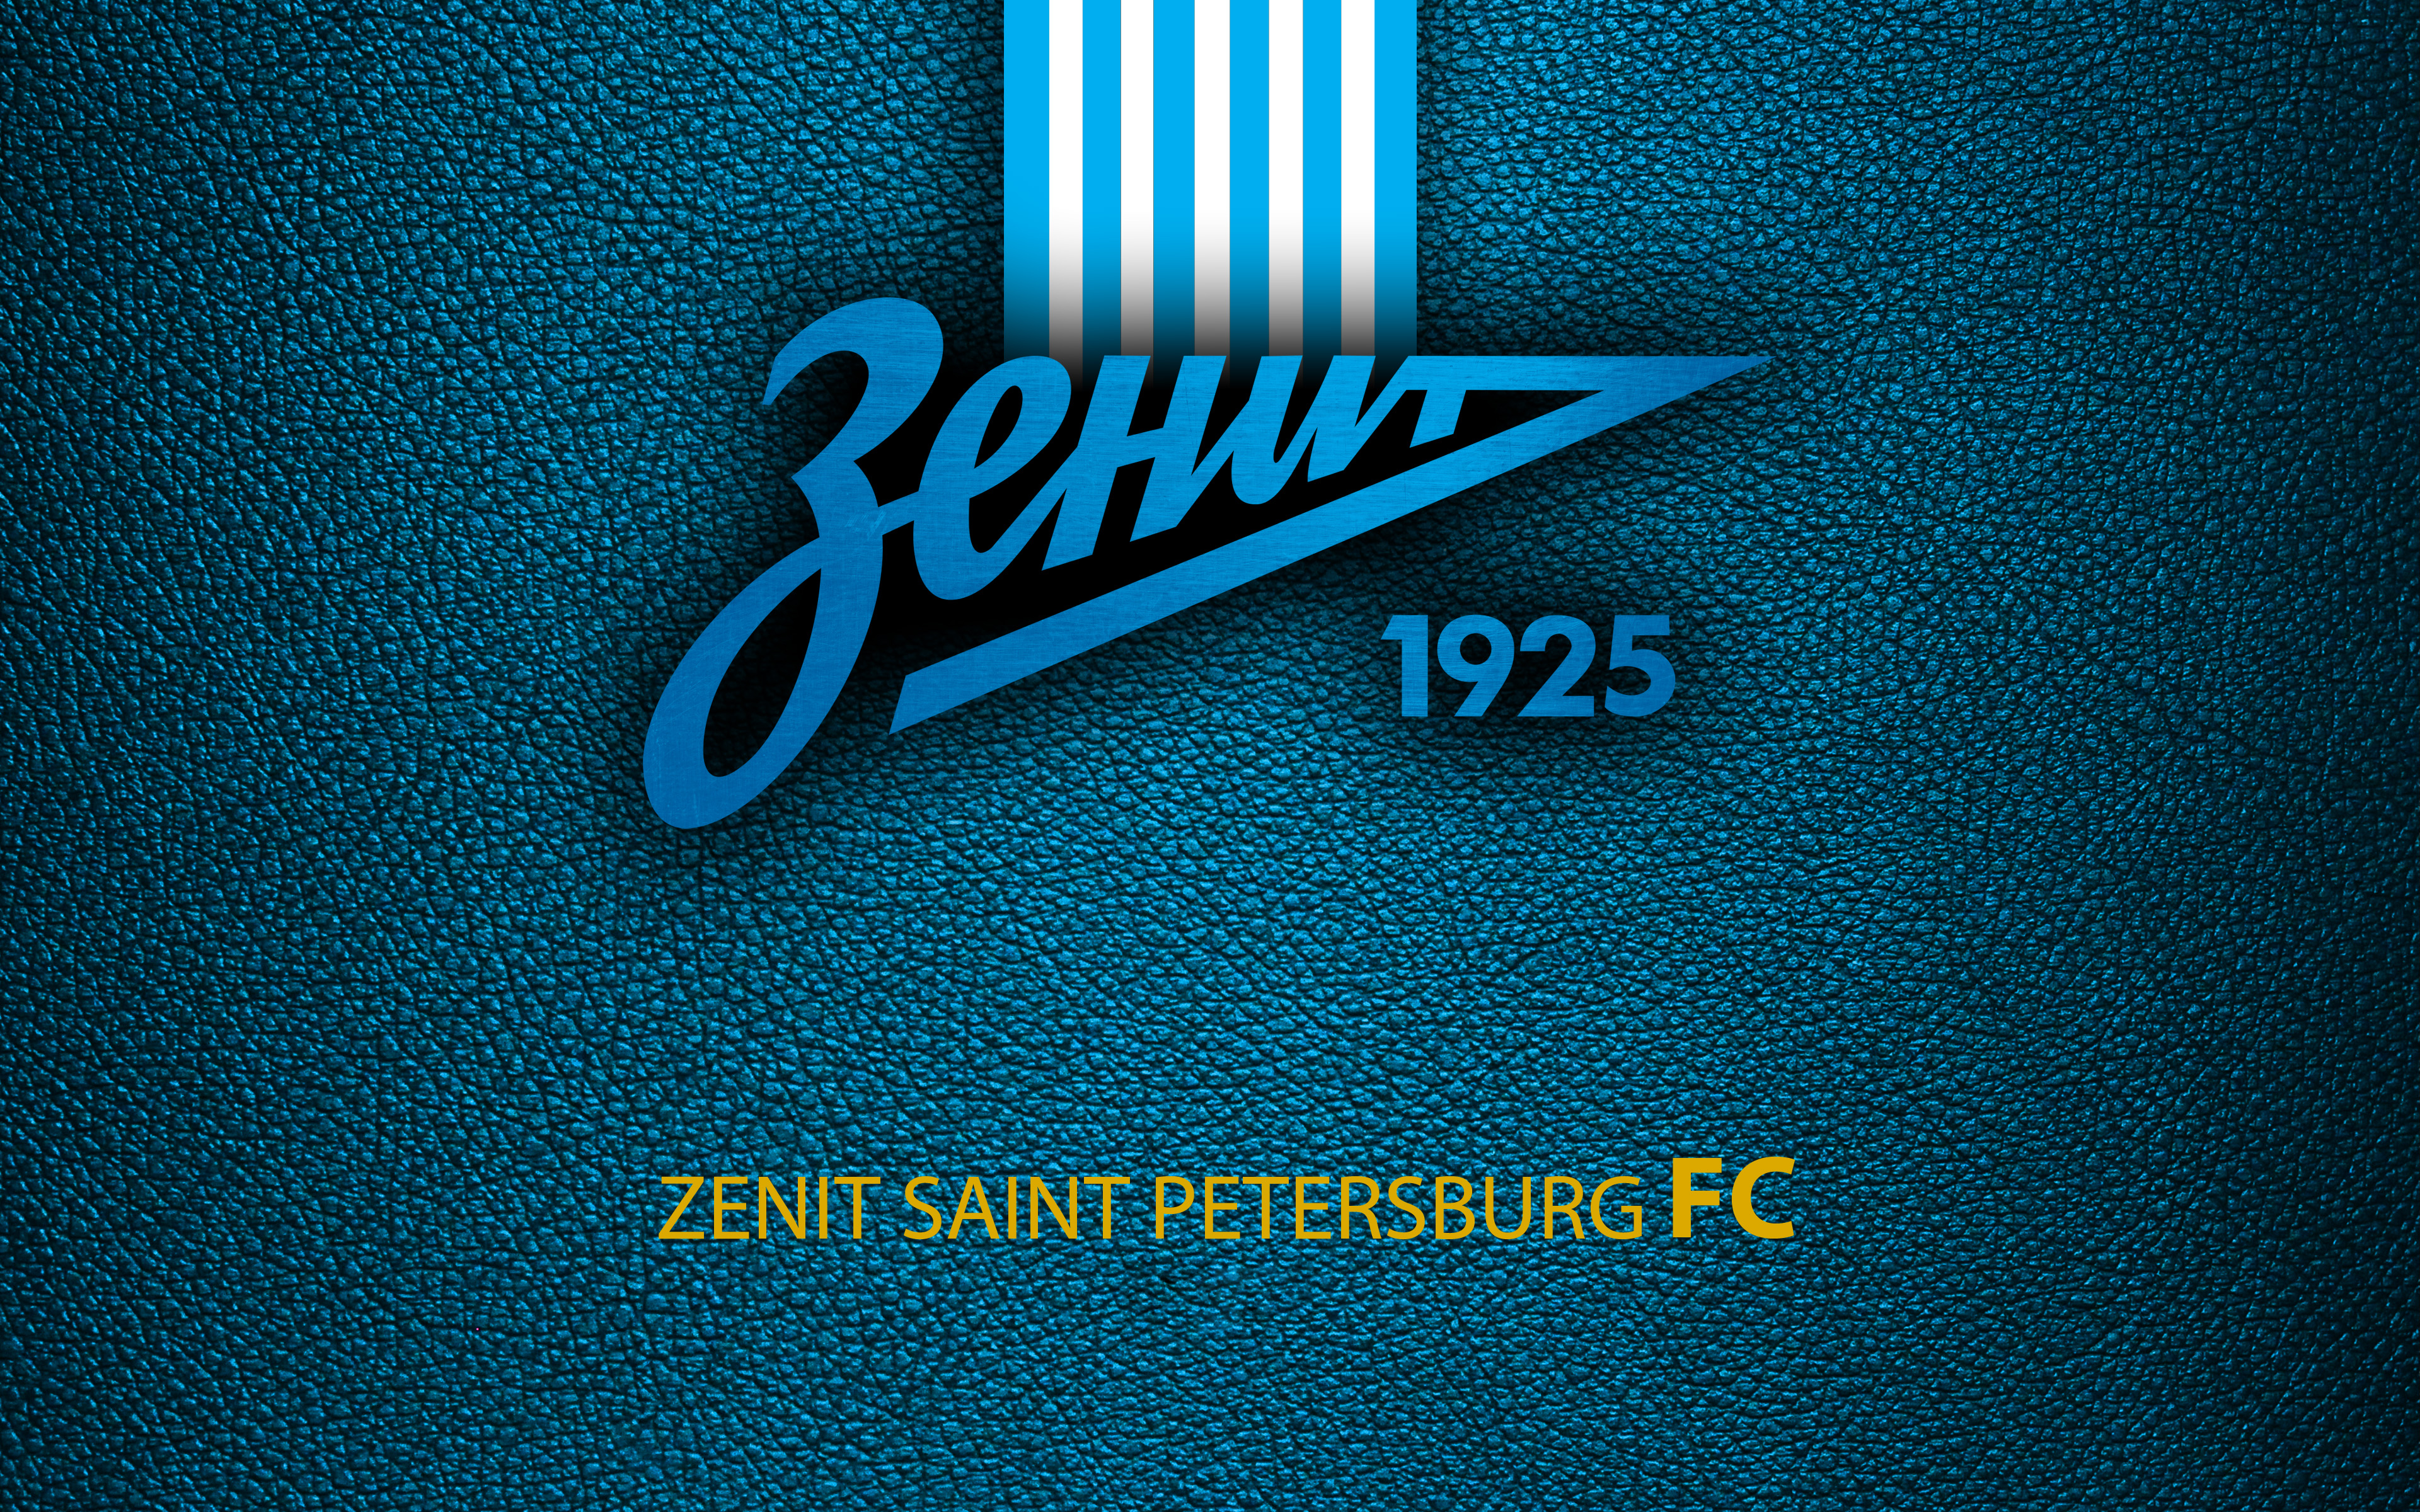 sports, fc zenit saint petersburg, emblem, logo, soccer